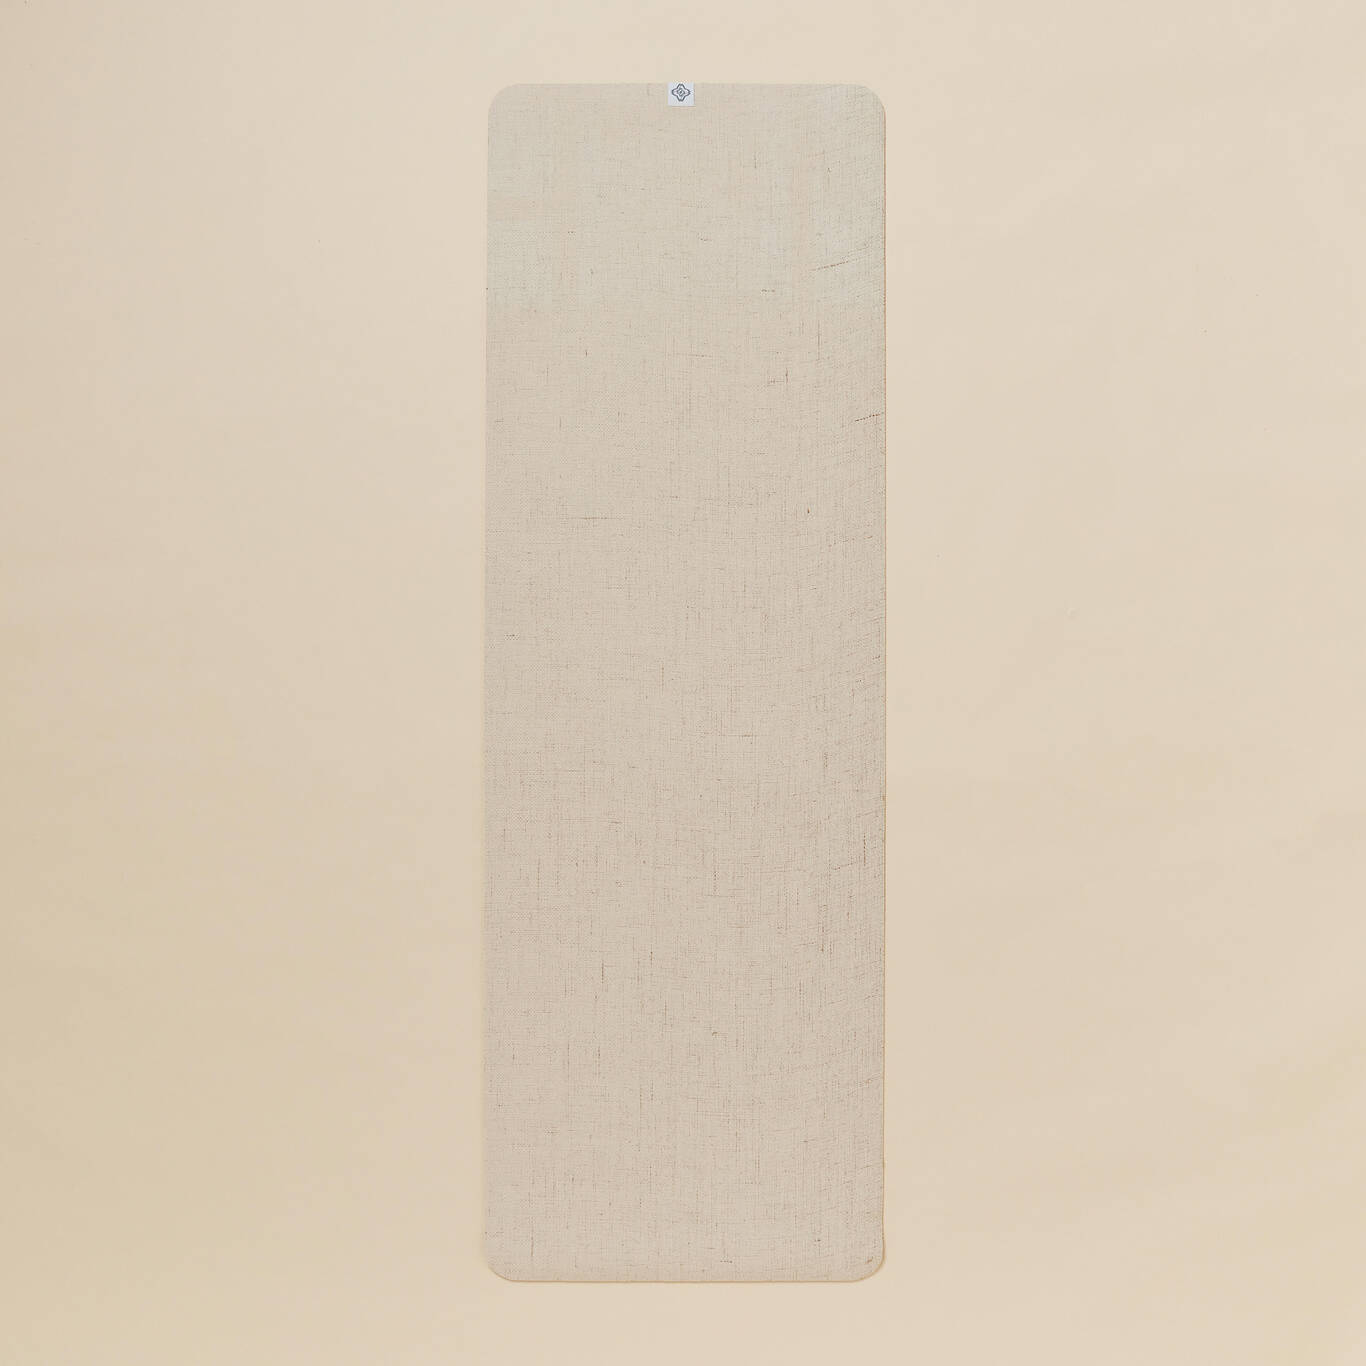 183 cm x 61 cm x 4 mm Jute and Natural Rubber Yoga Mat